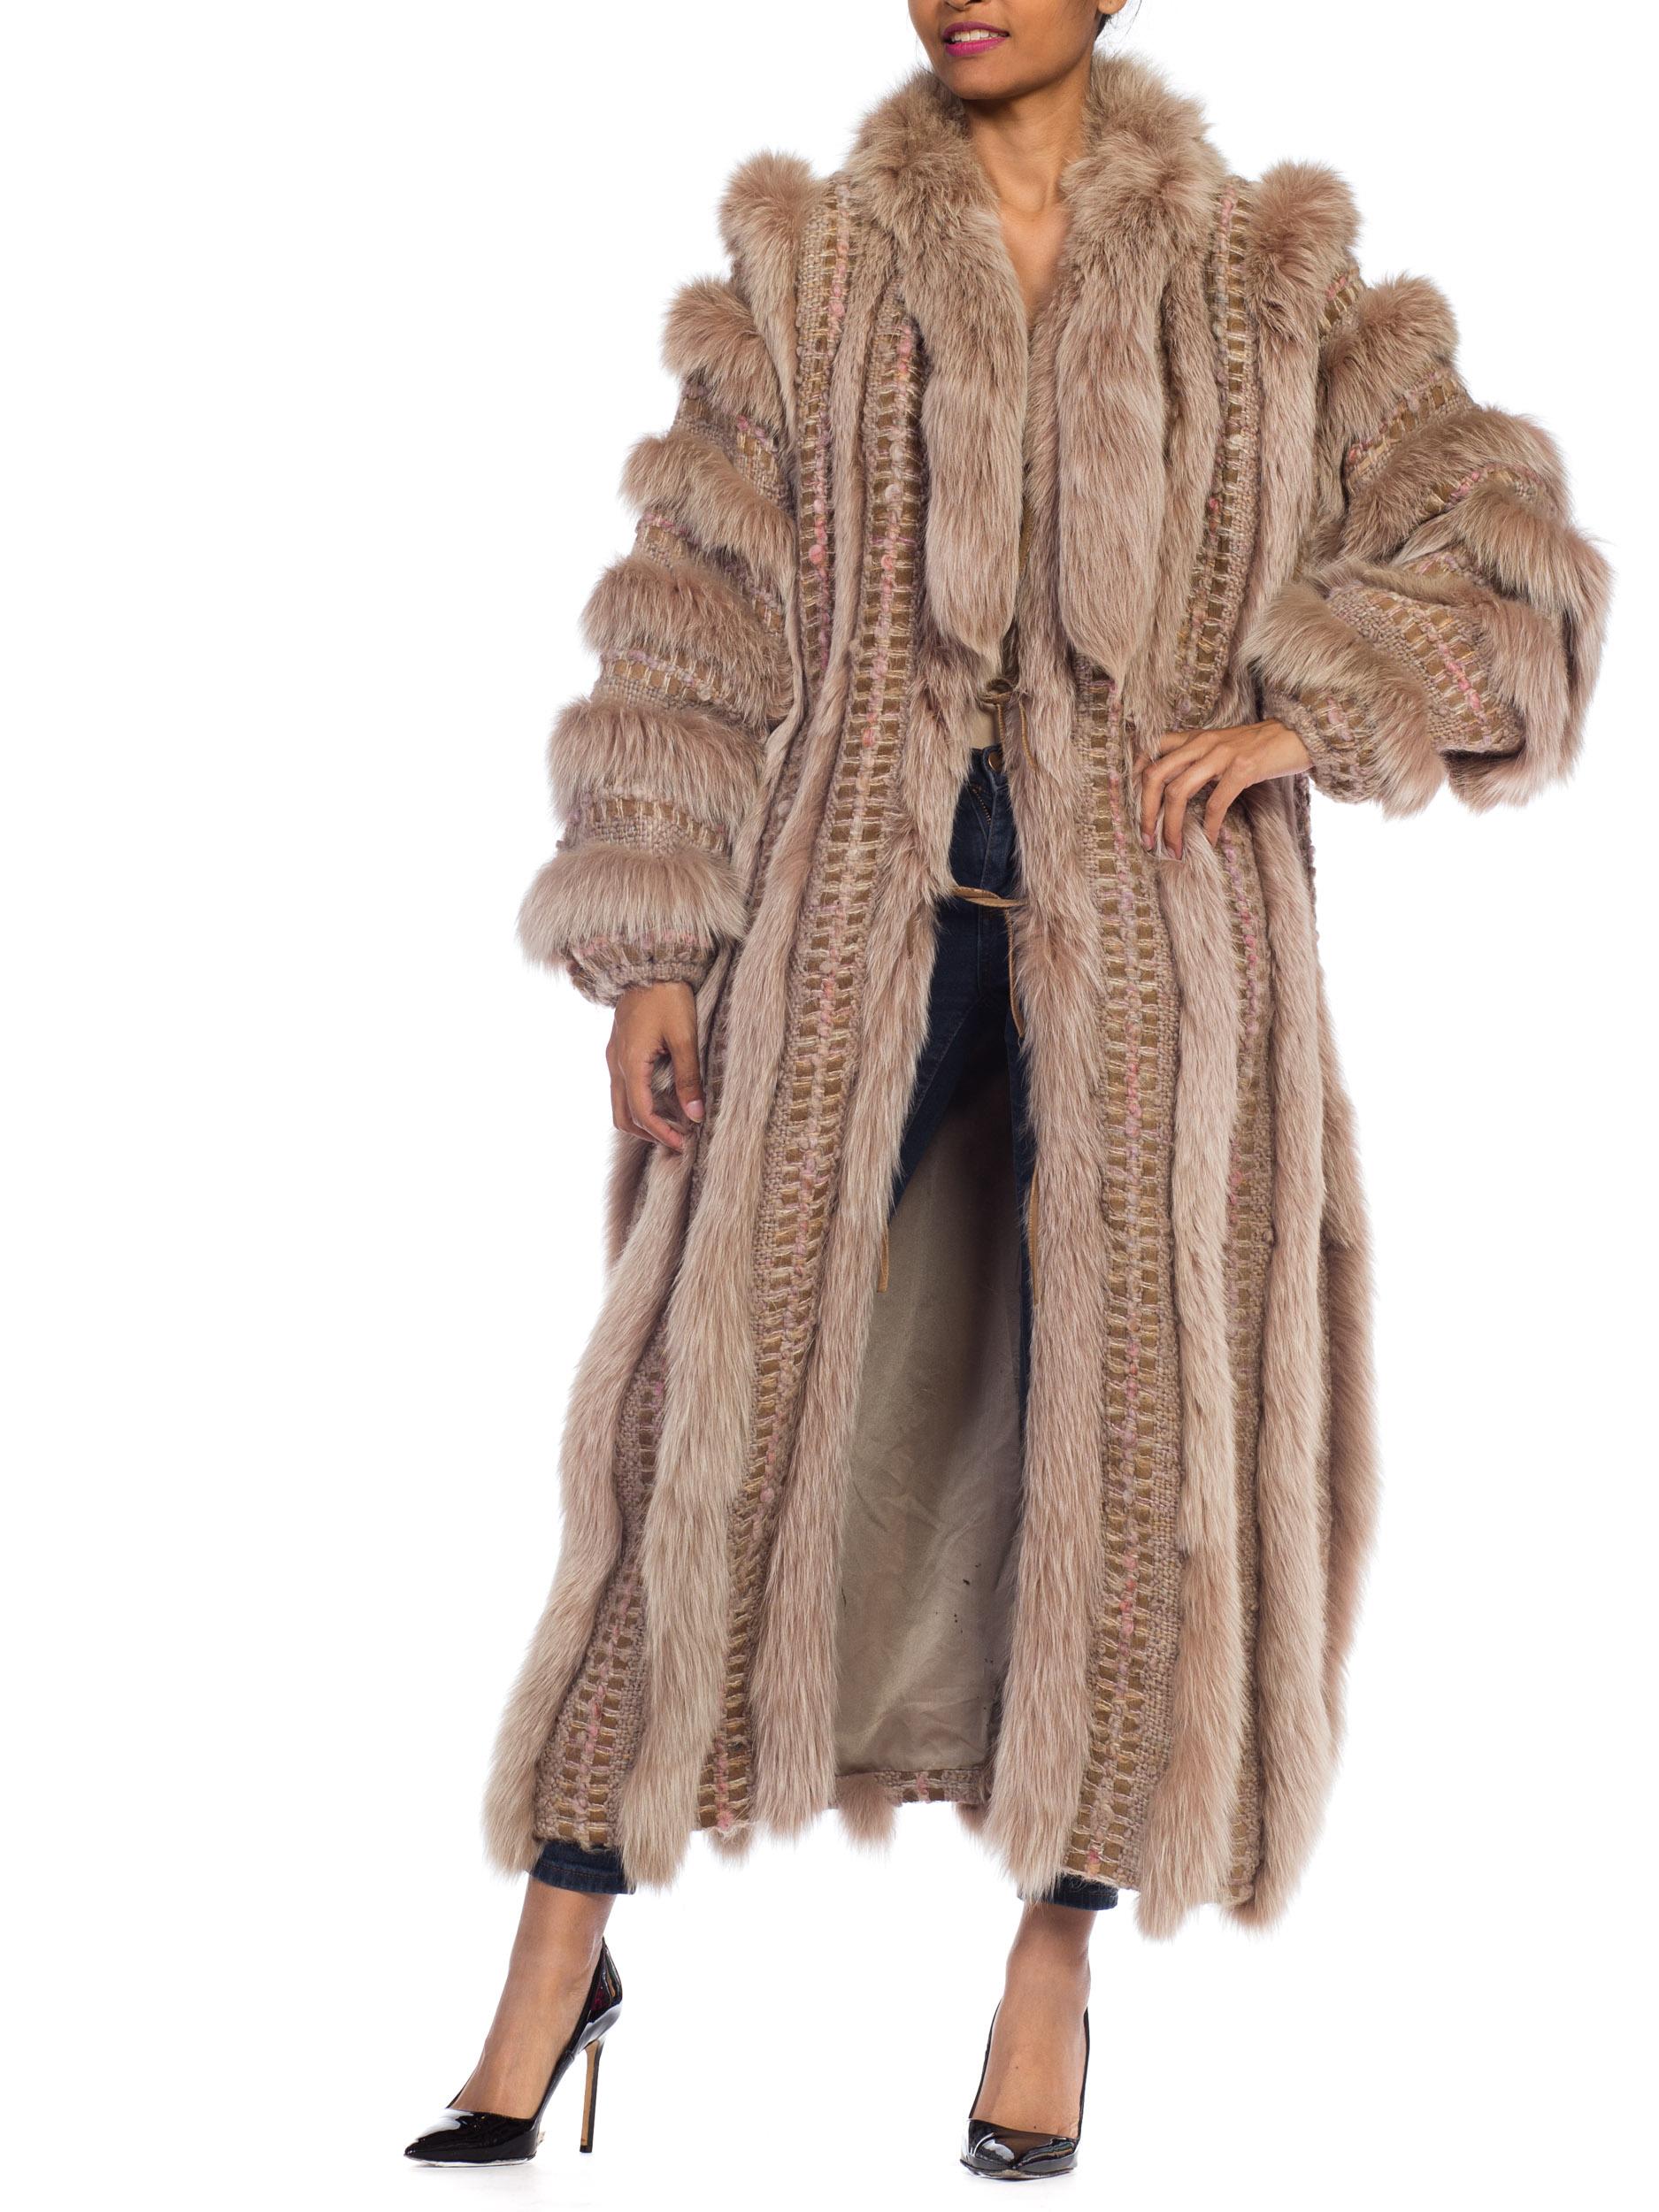 Wild Oversized Fox Fur & Knit Coat 9